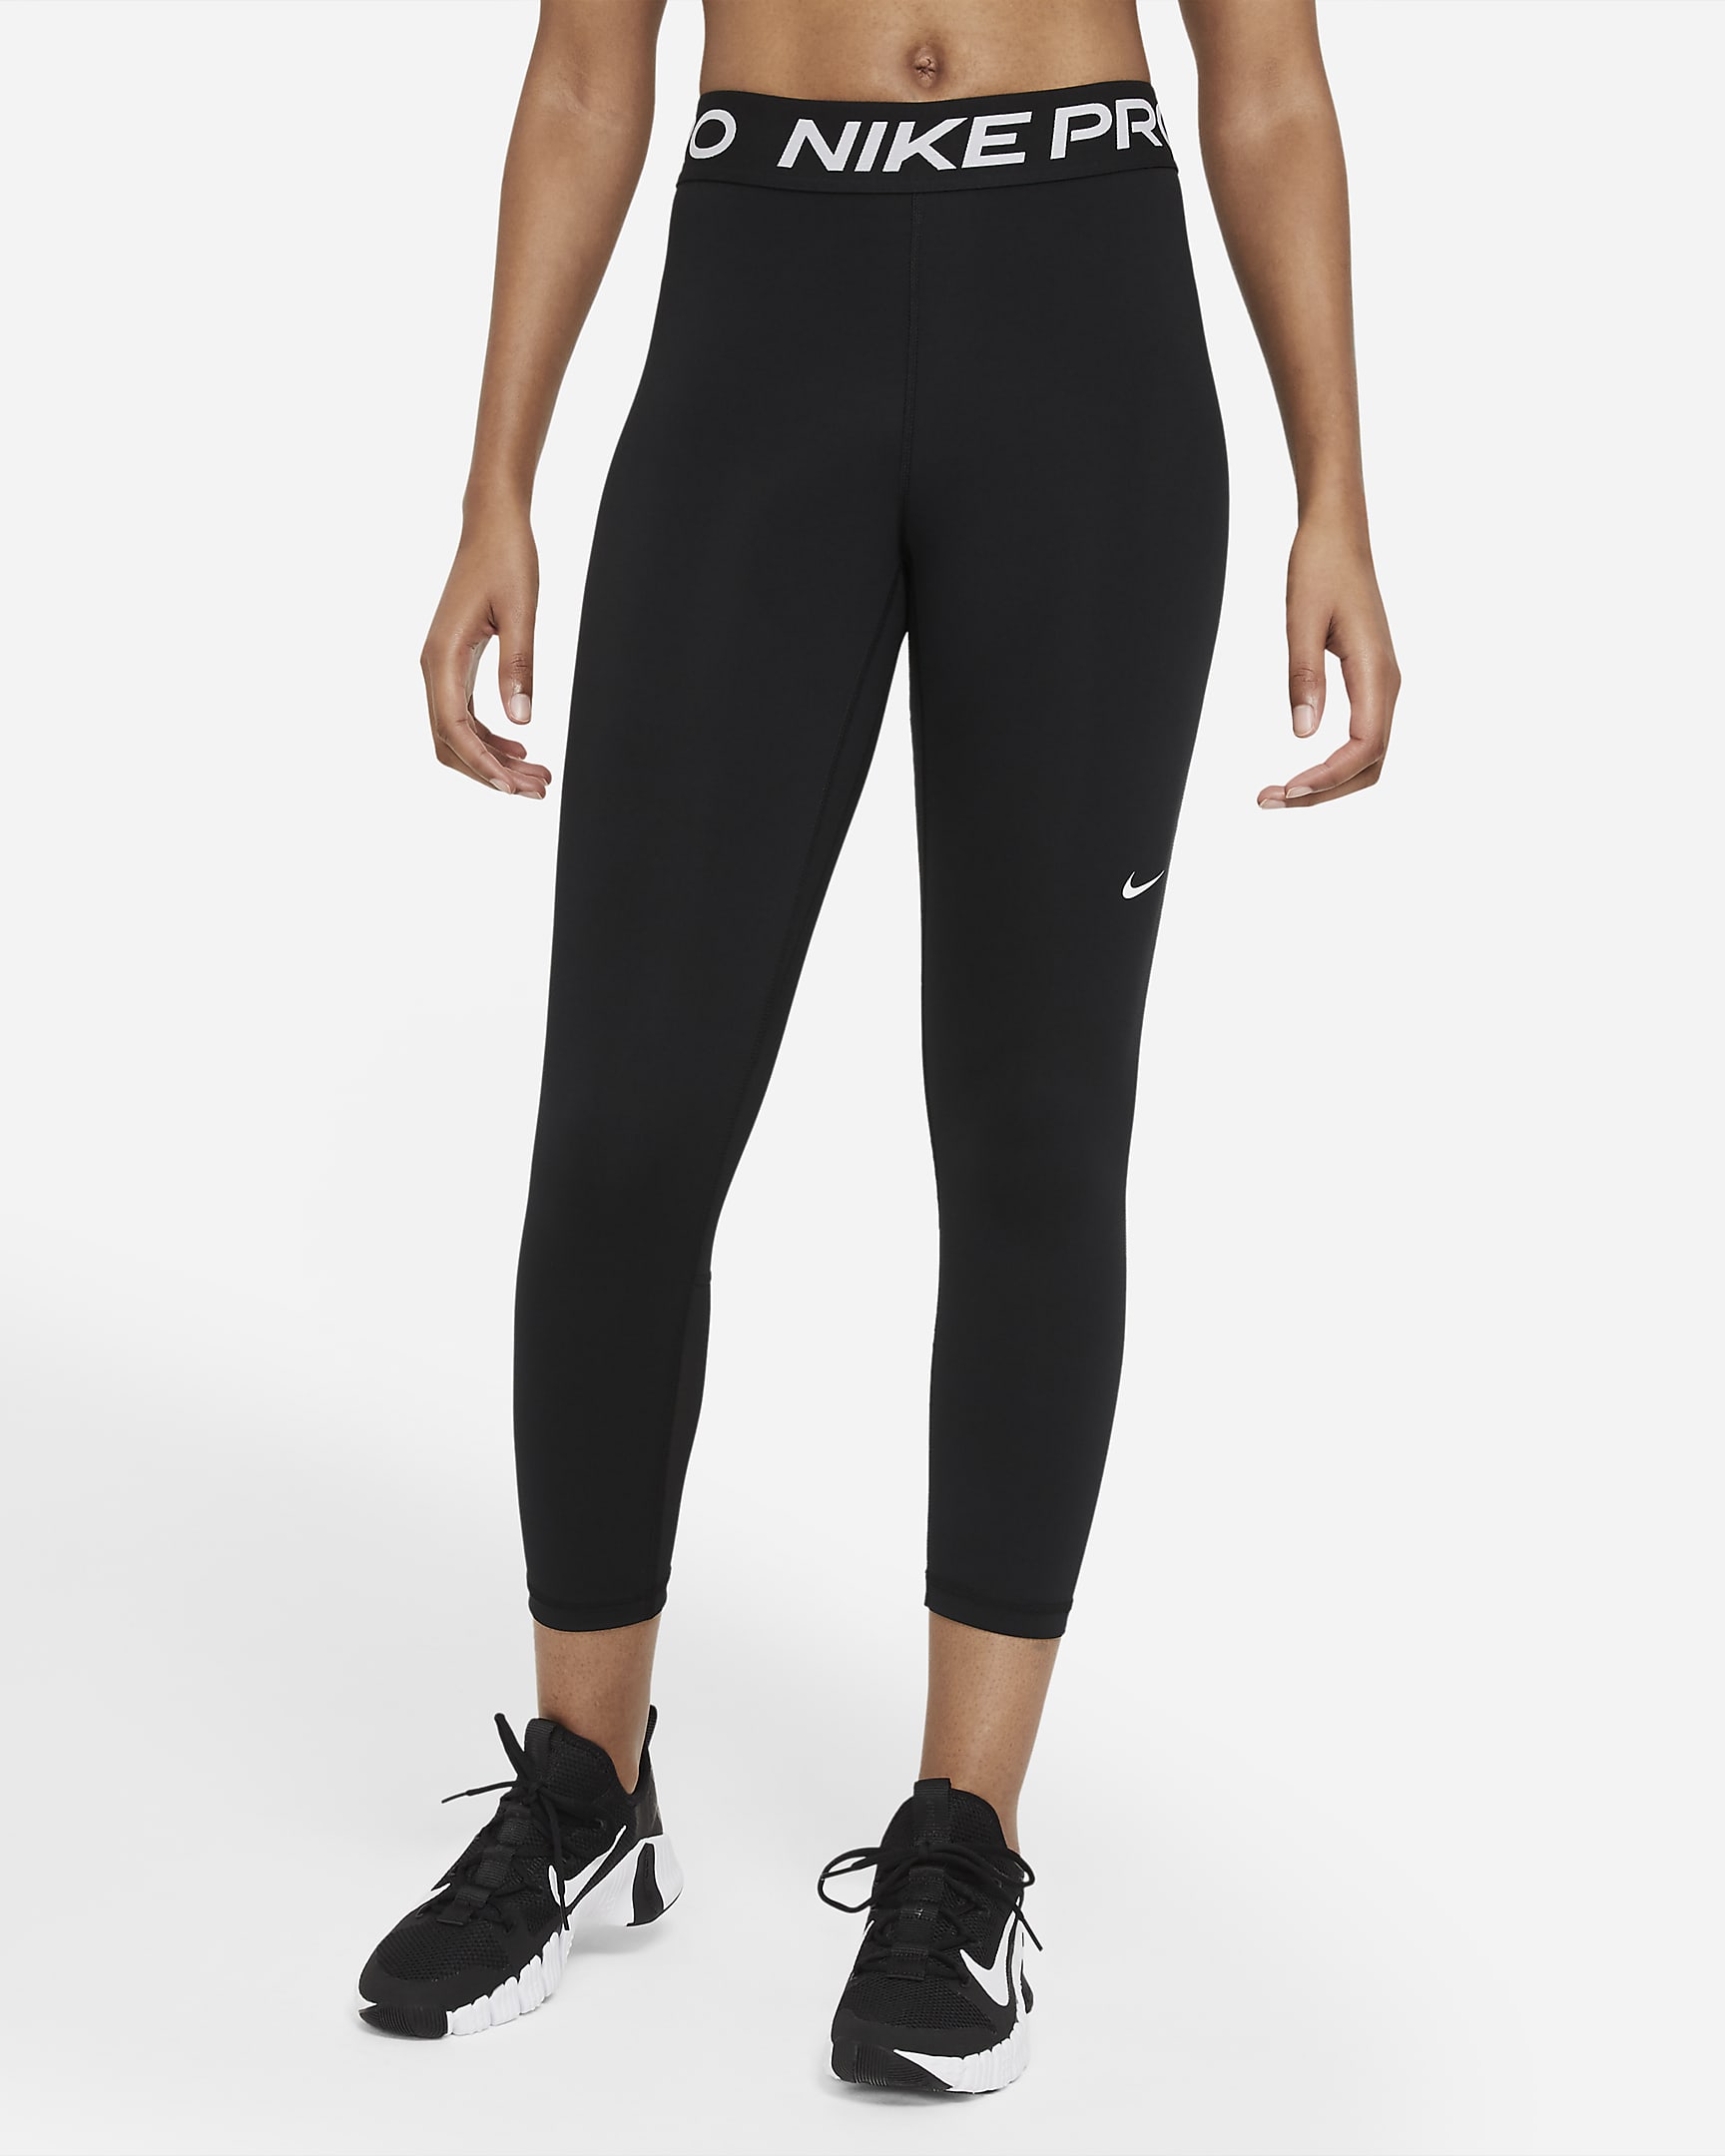 Nike Pro Leggings cortos de talle medio con panel de malla - Mujer - Negro/Blanco